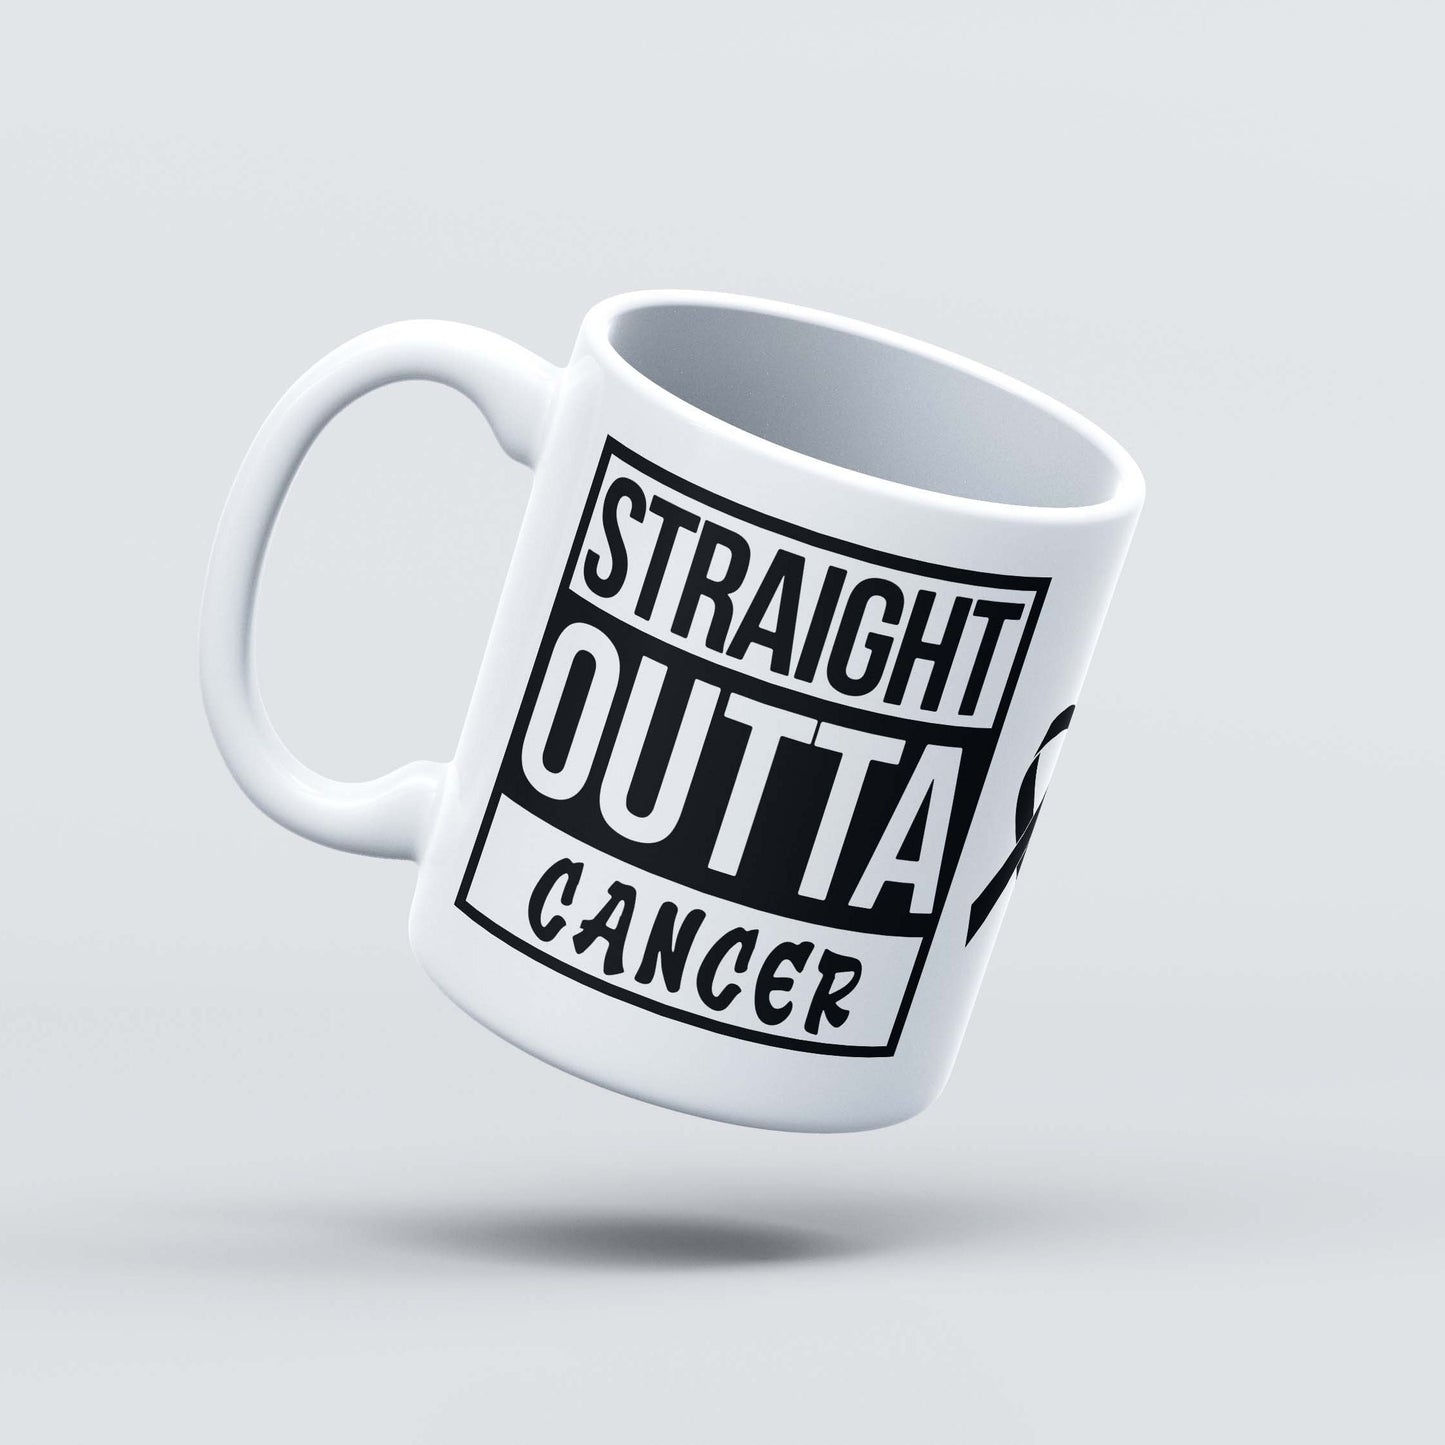 Straight Outta Mug-Cancer